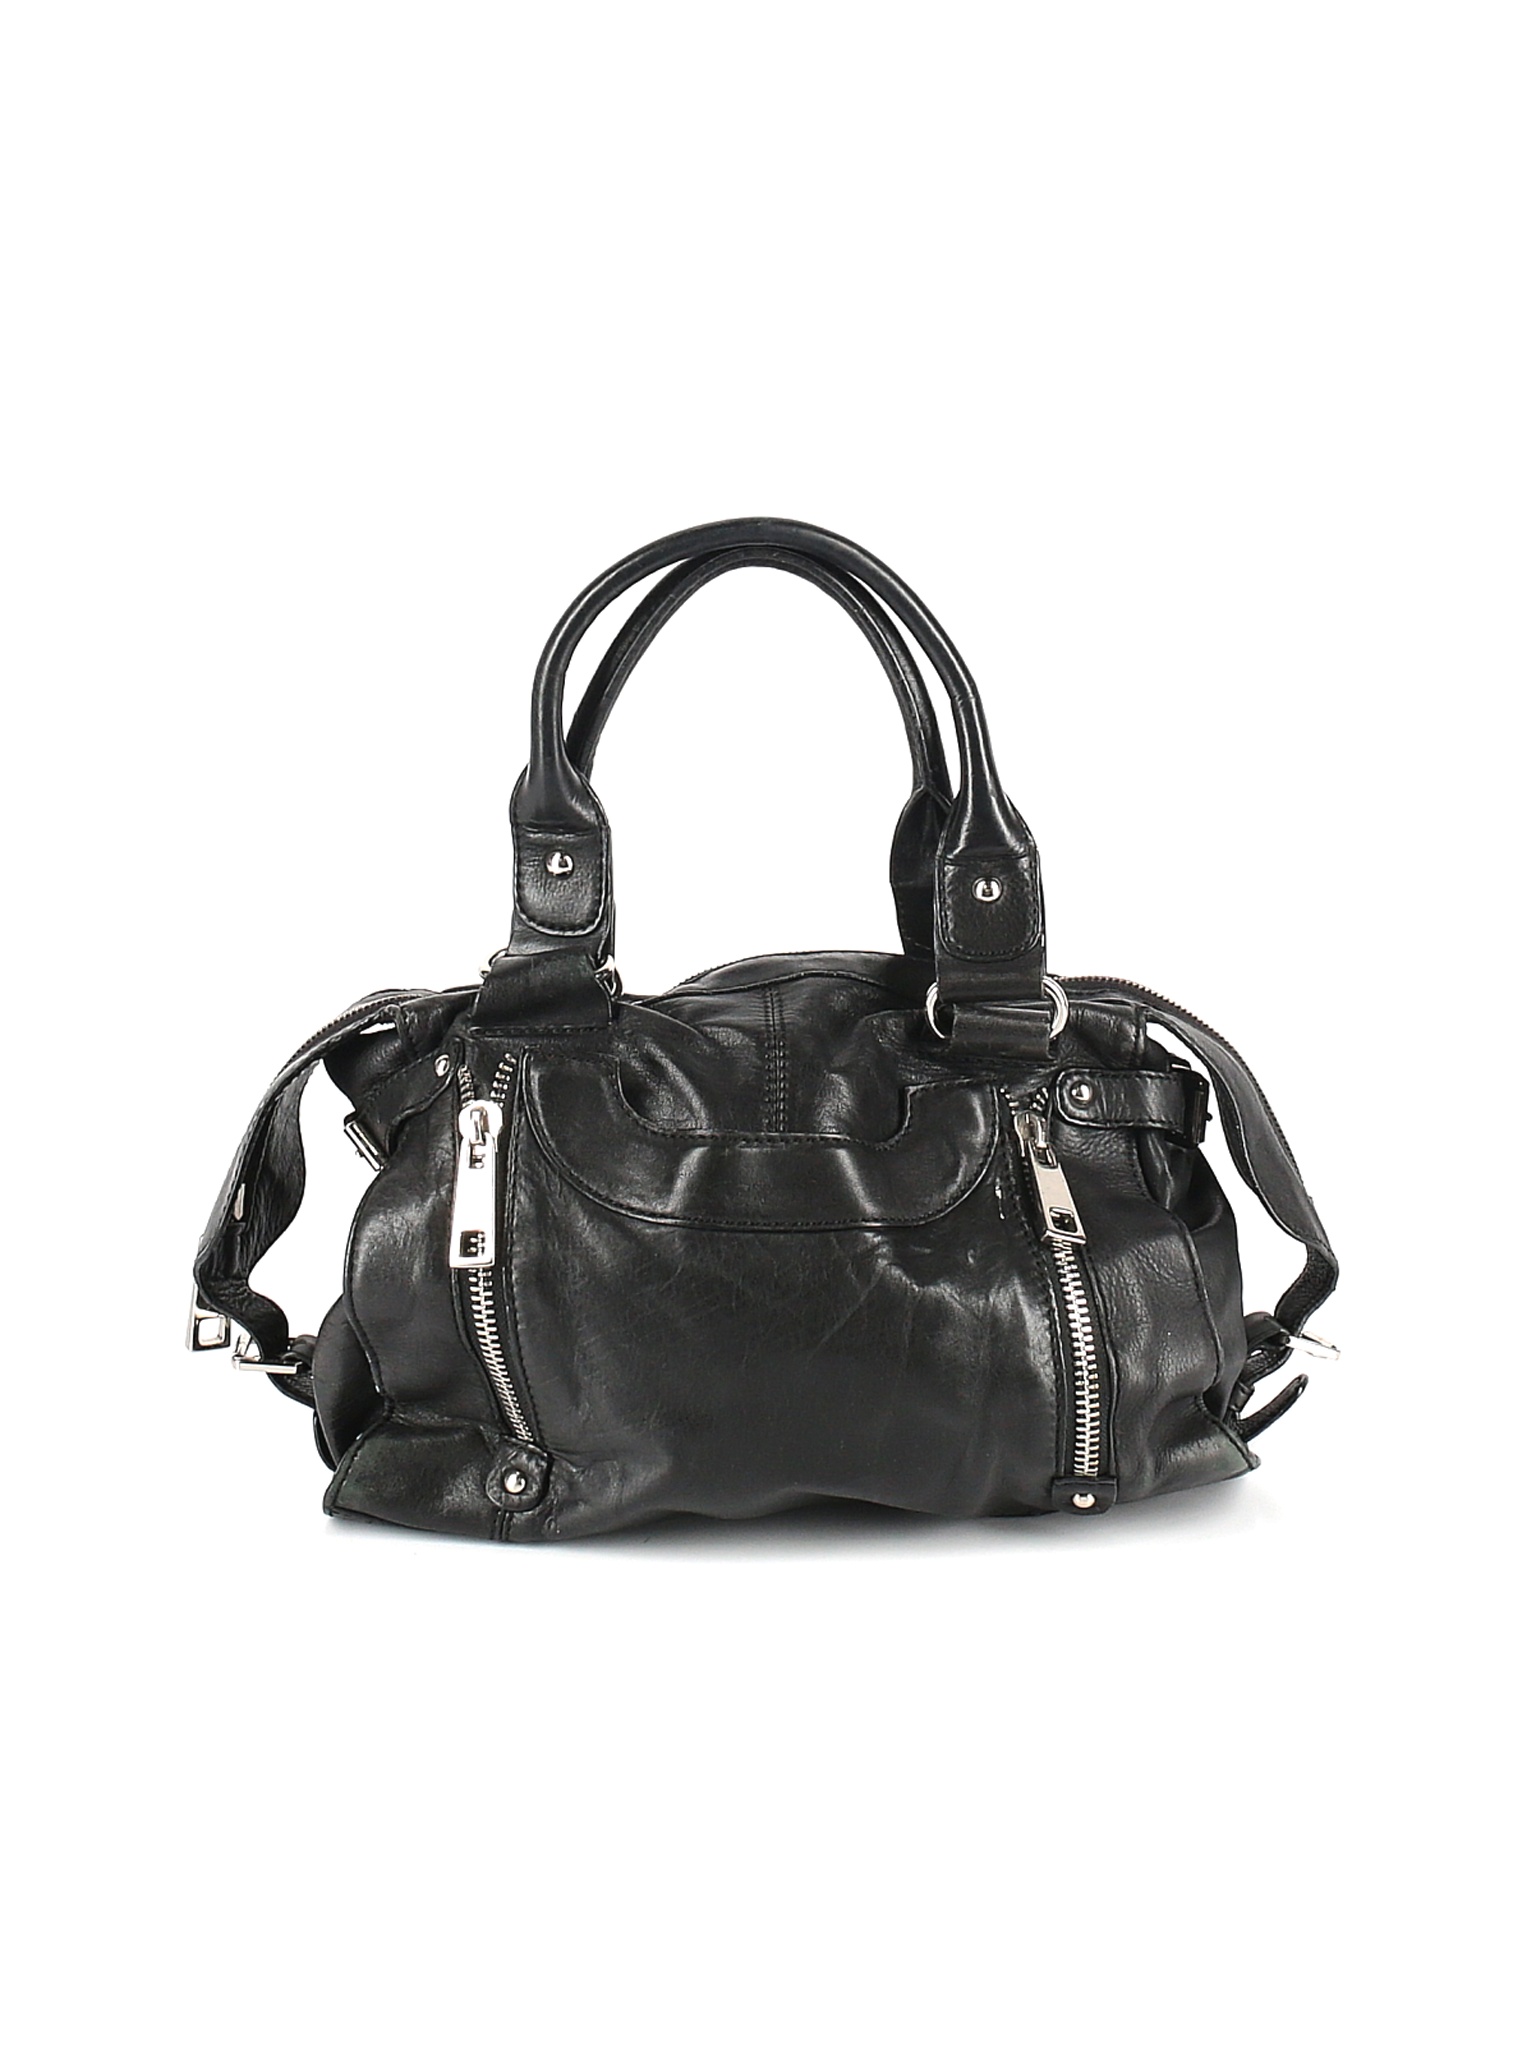 Via Spiga Women Black Leather Satchel One Size | eBay